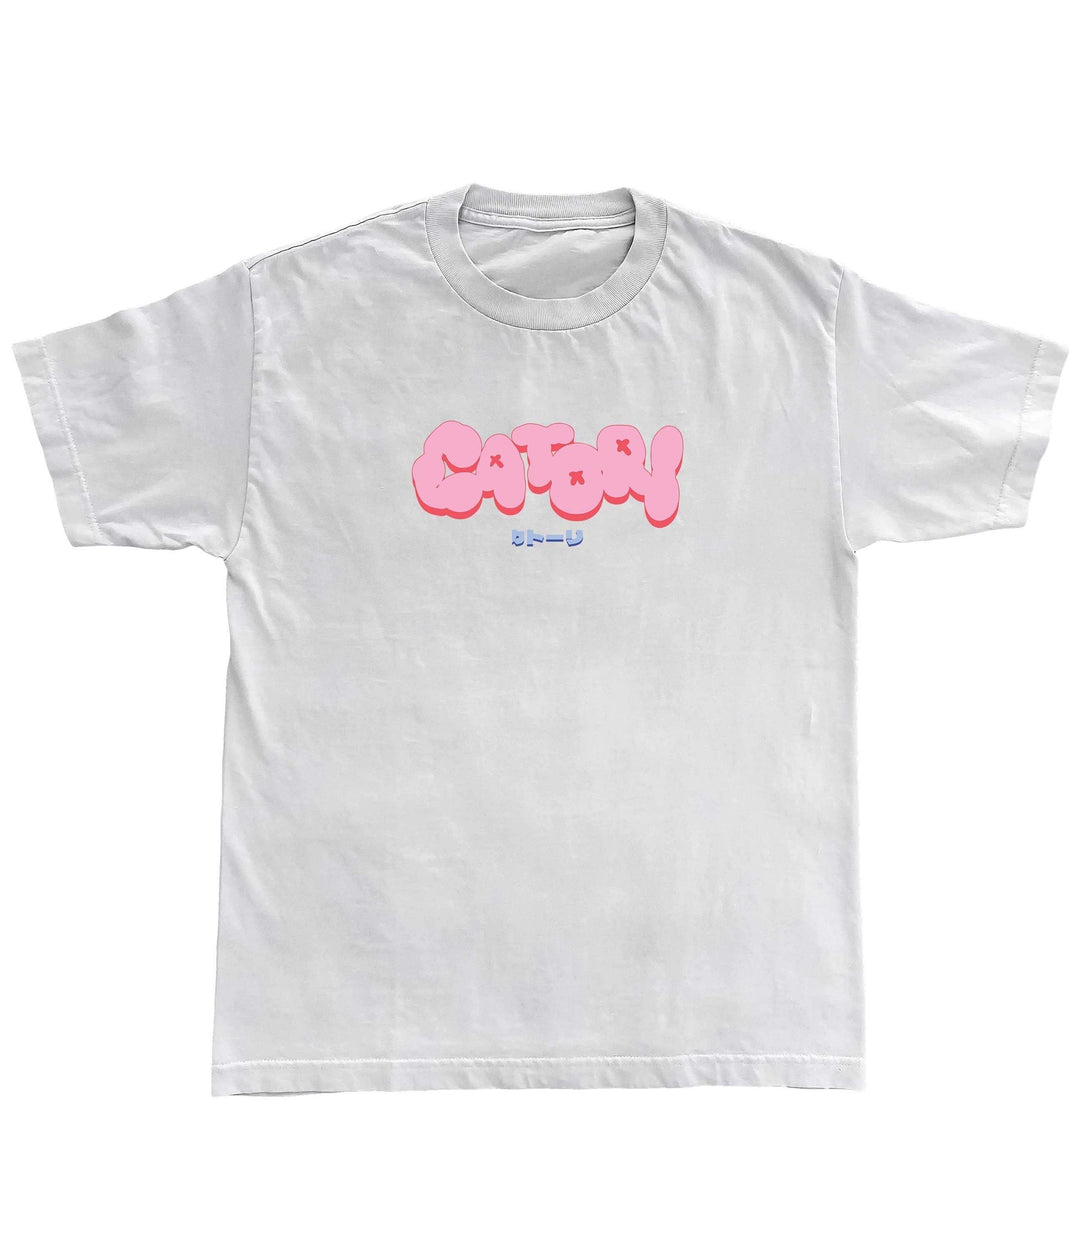 Kunoichi T-Shirt at Catori Clothing | Graphic & Anime Tees, Hoodies & Sweatshirts 